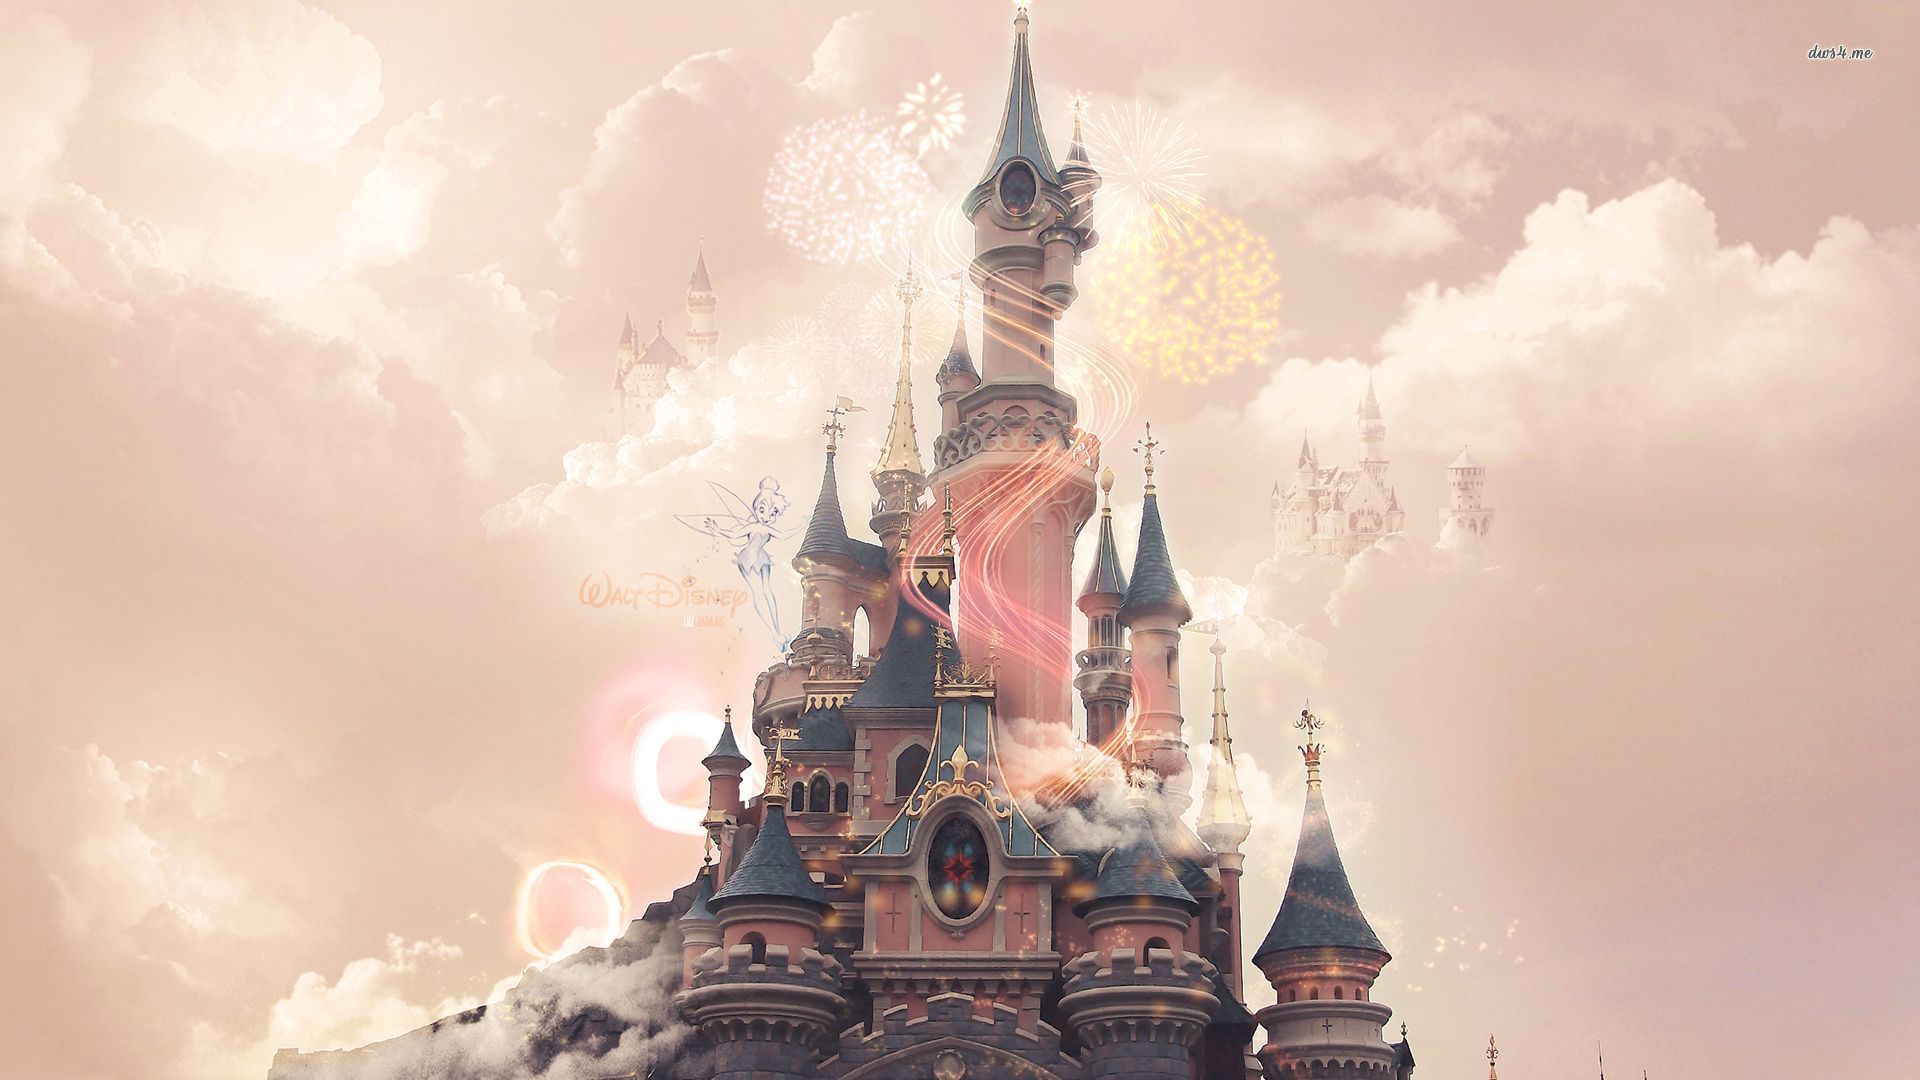 Disney Kids Castle Wallpaper Background Printable Disney Picture  Background Image And Wallpaper for Free Download